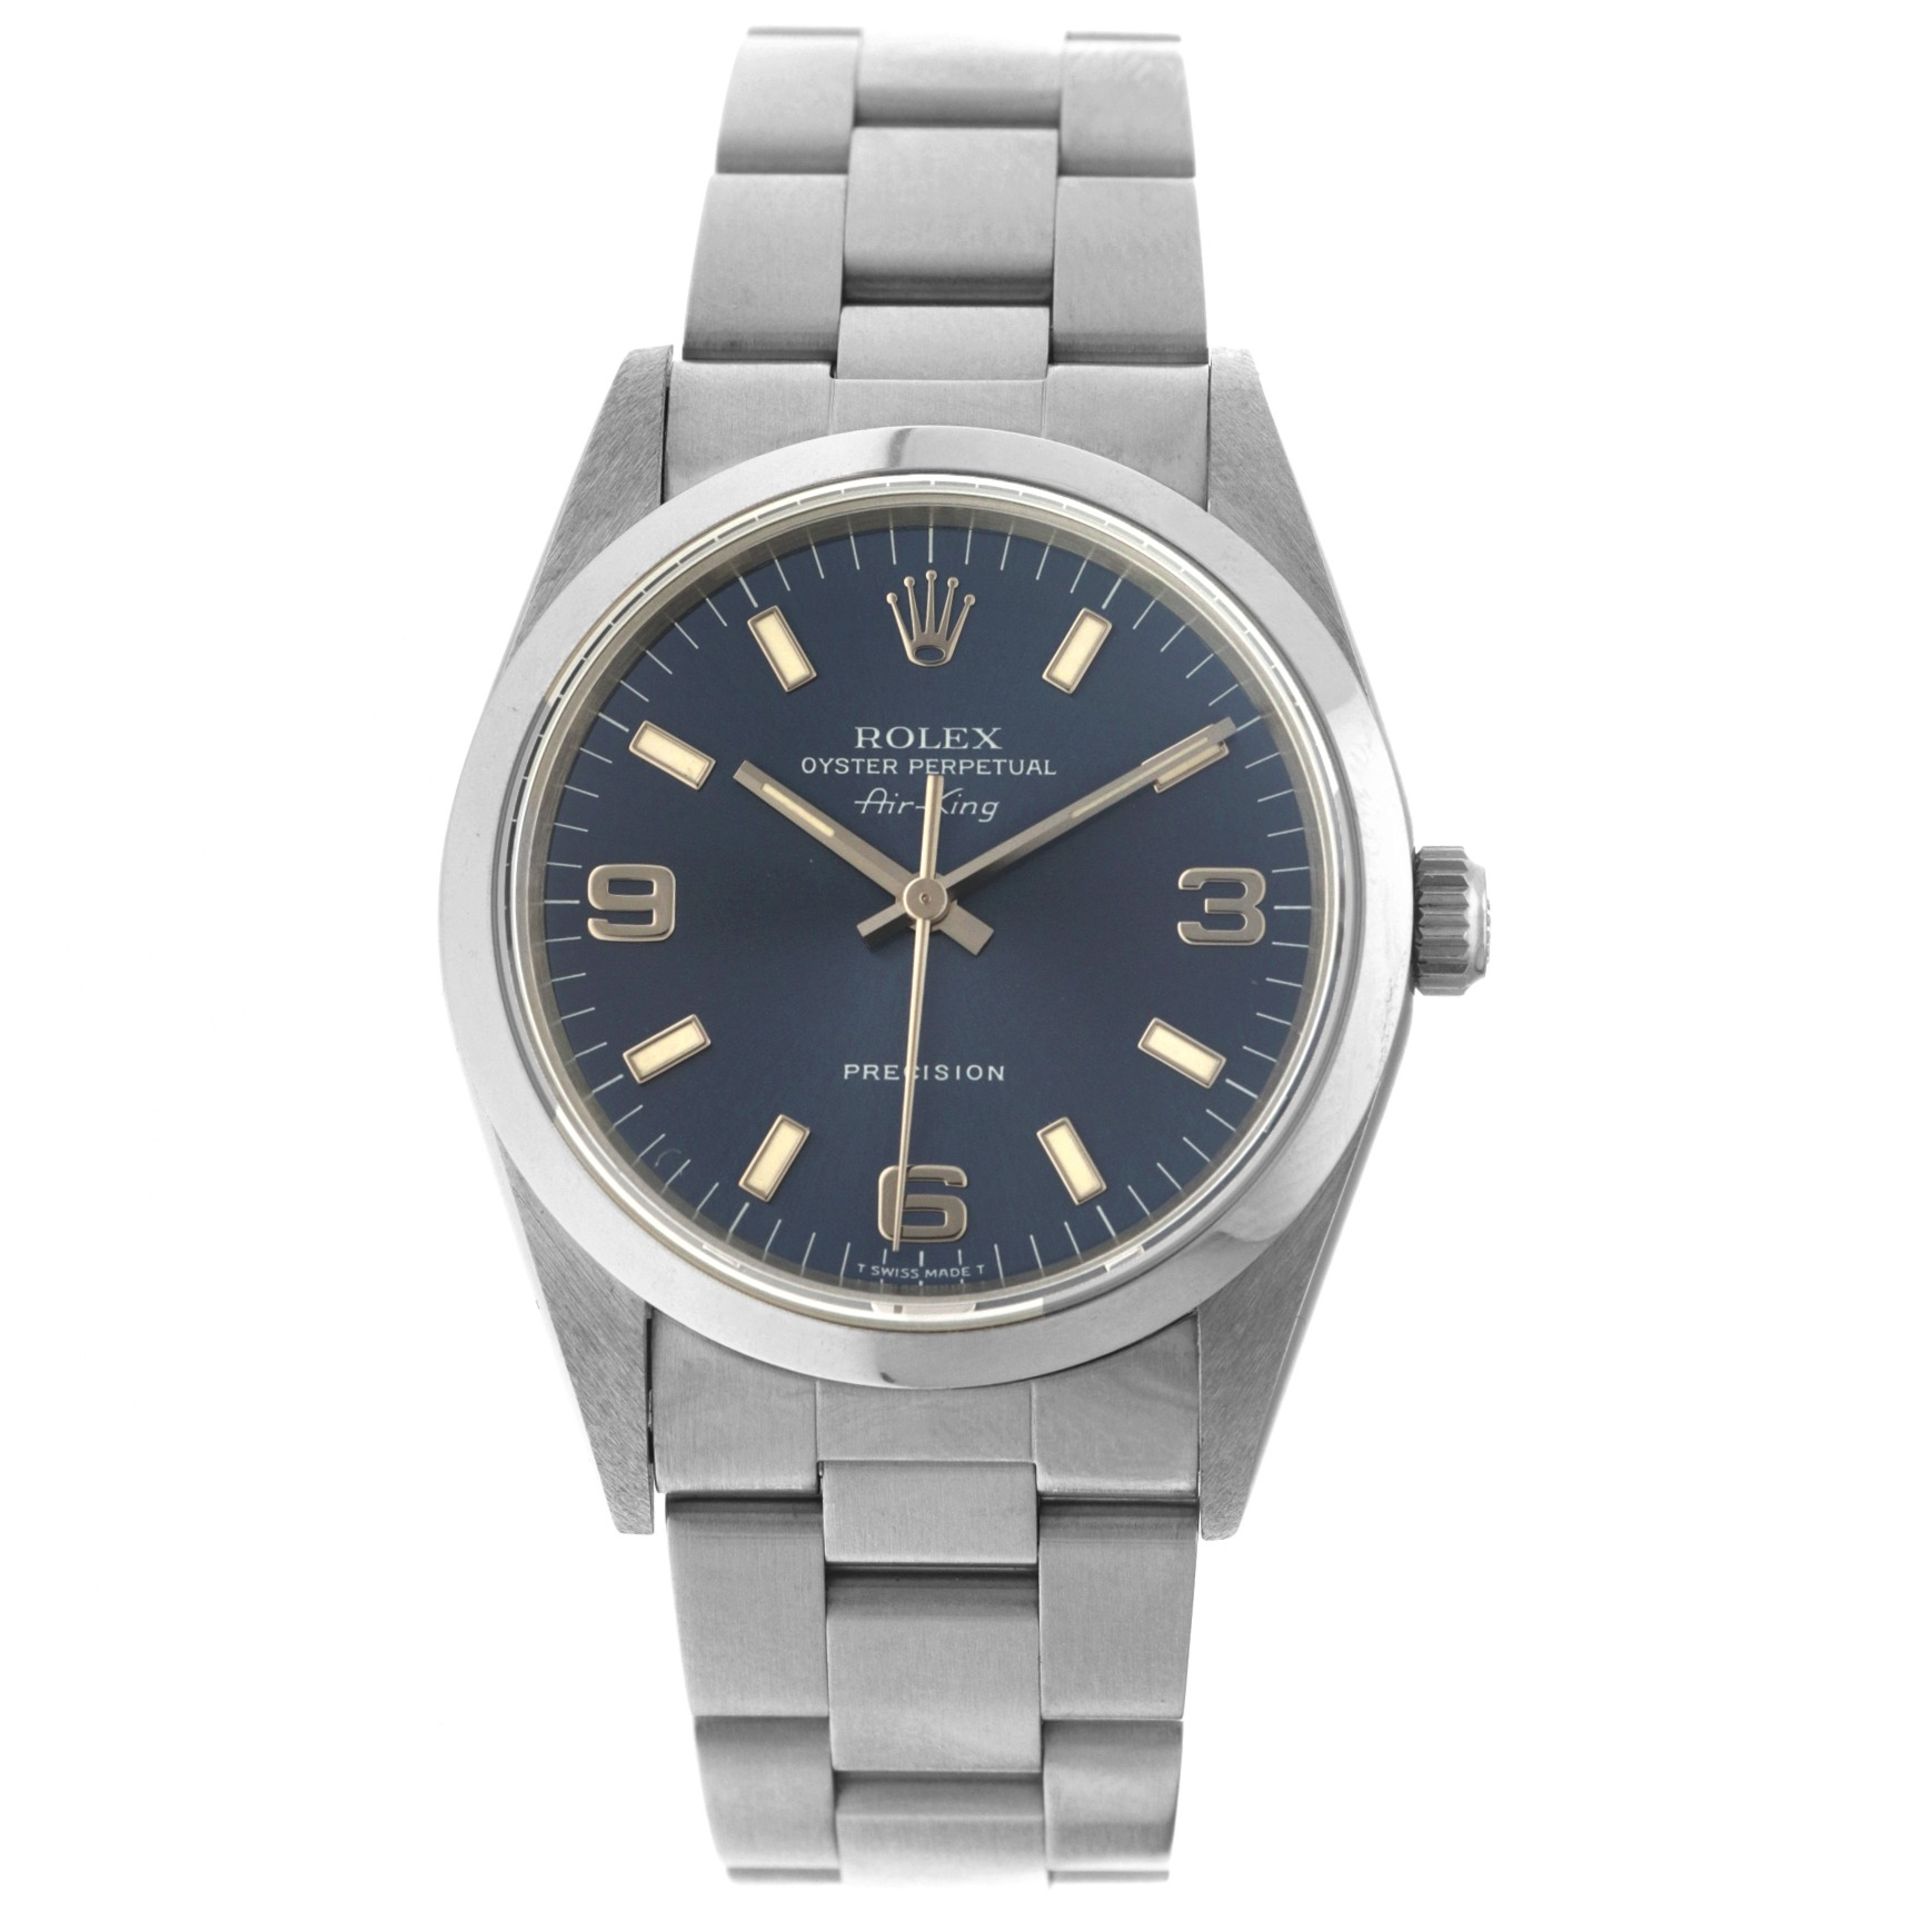 No Reserve - Rolex Air-King 14000 - Men's watch - approx. 1996.